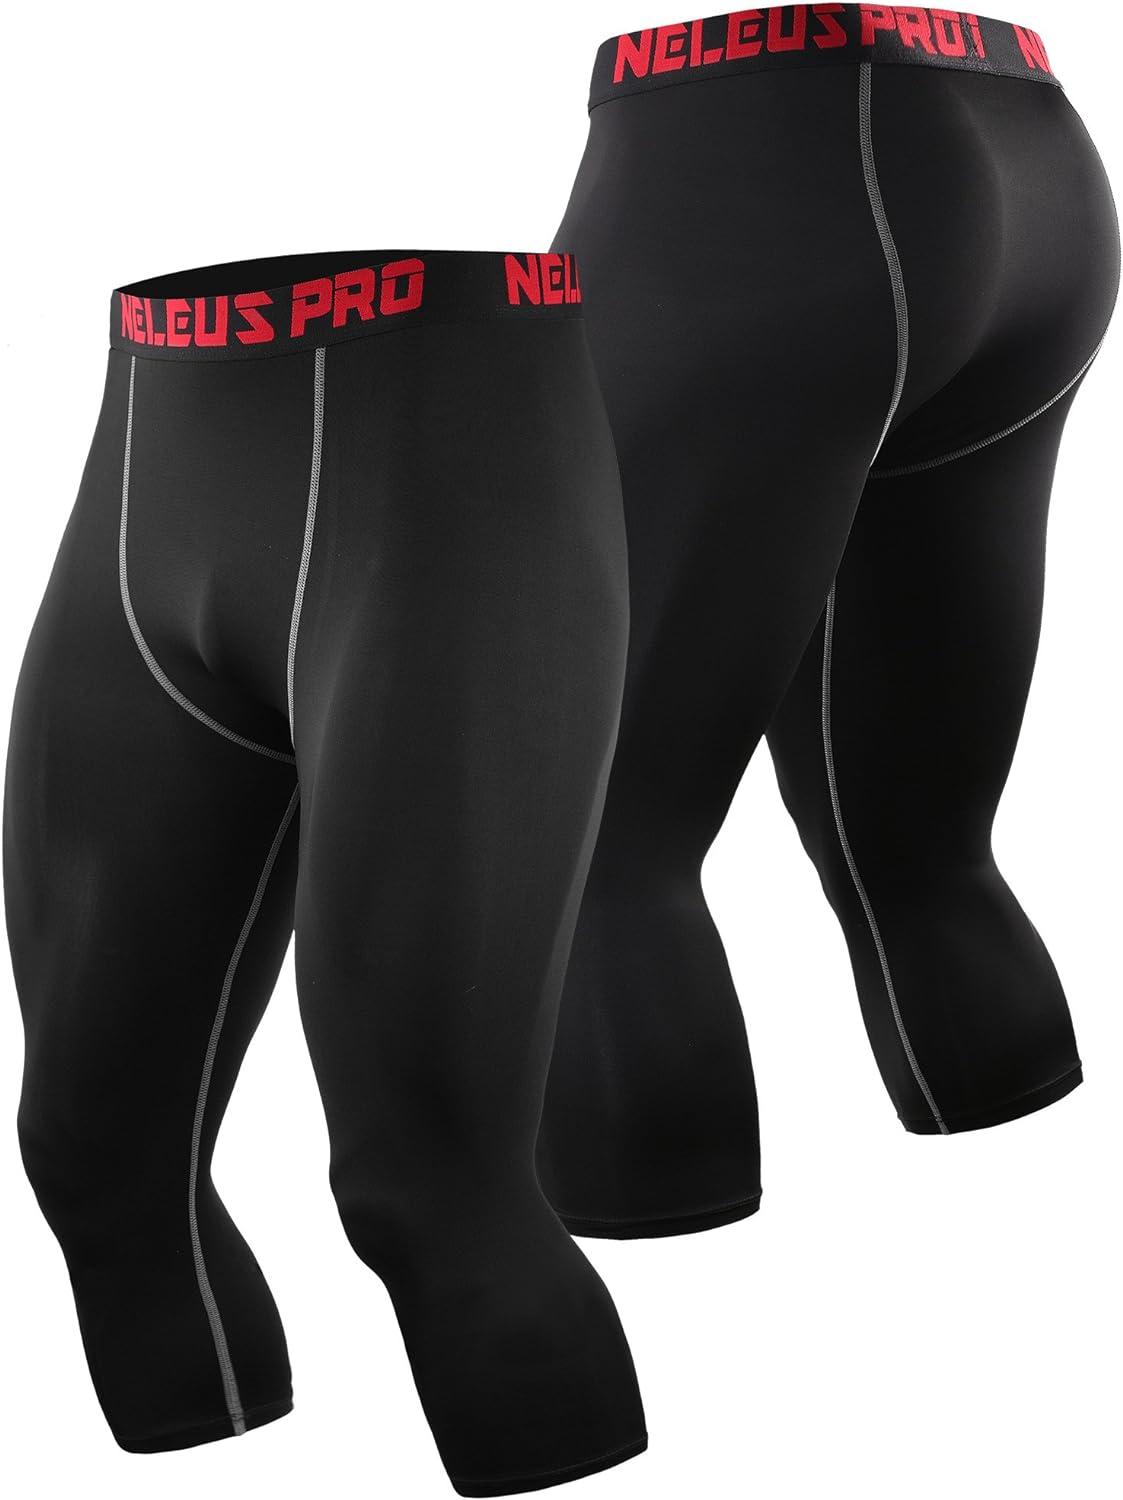  NELEUS Men's 2 Pack Dry Fit Compression Pants Running